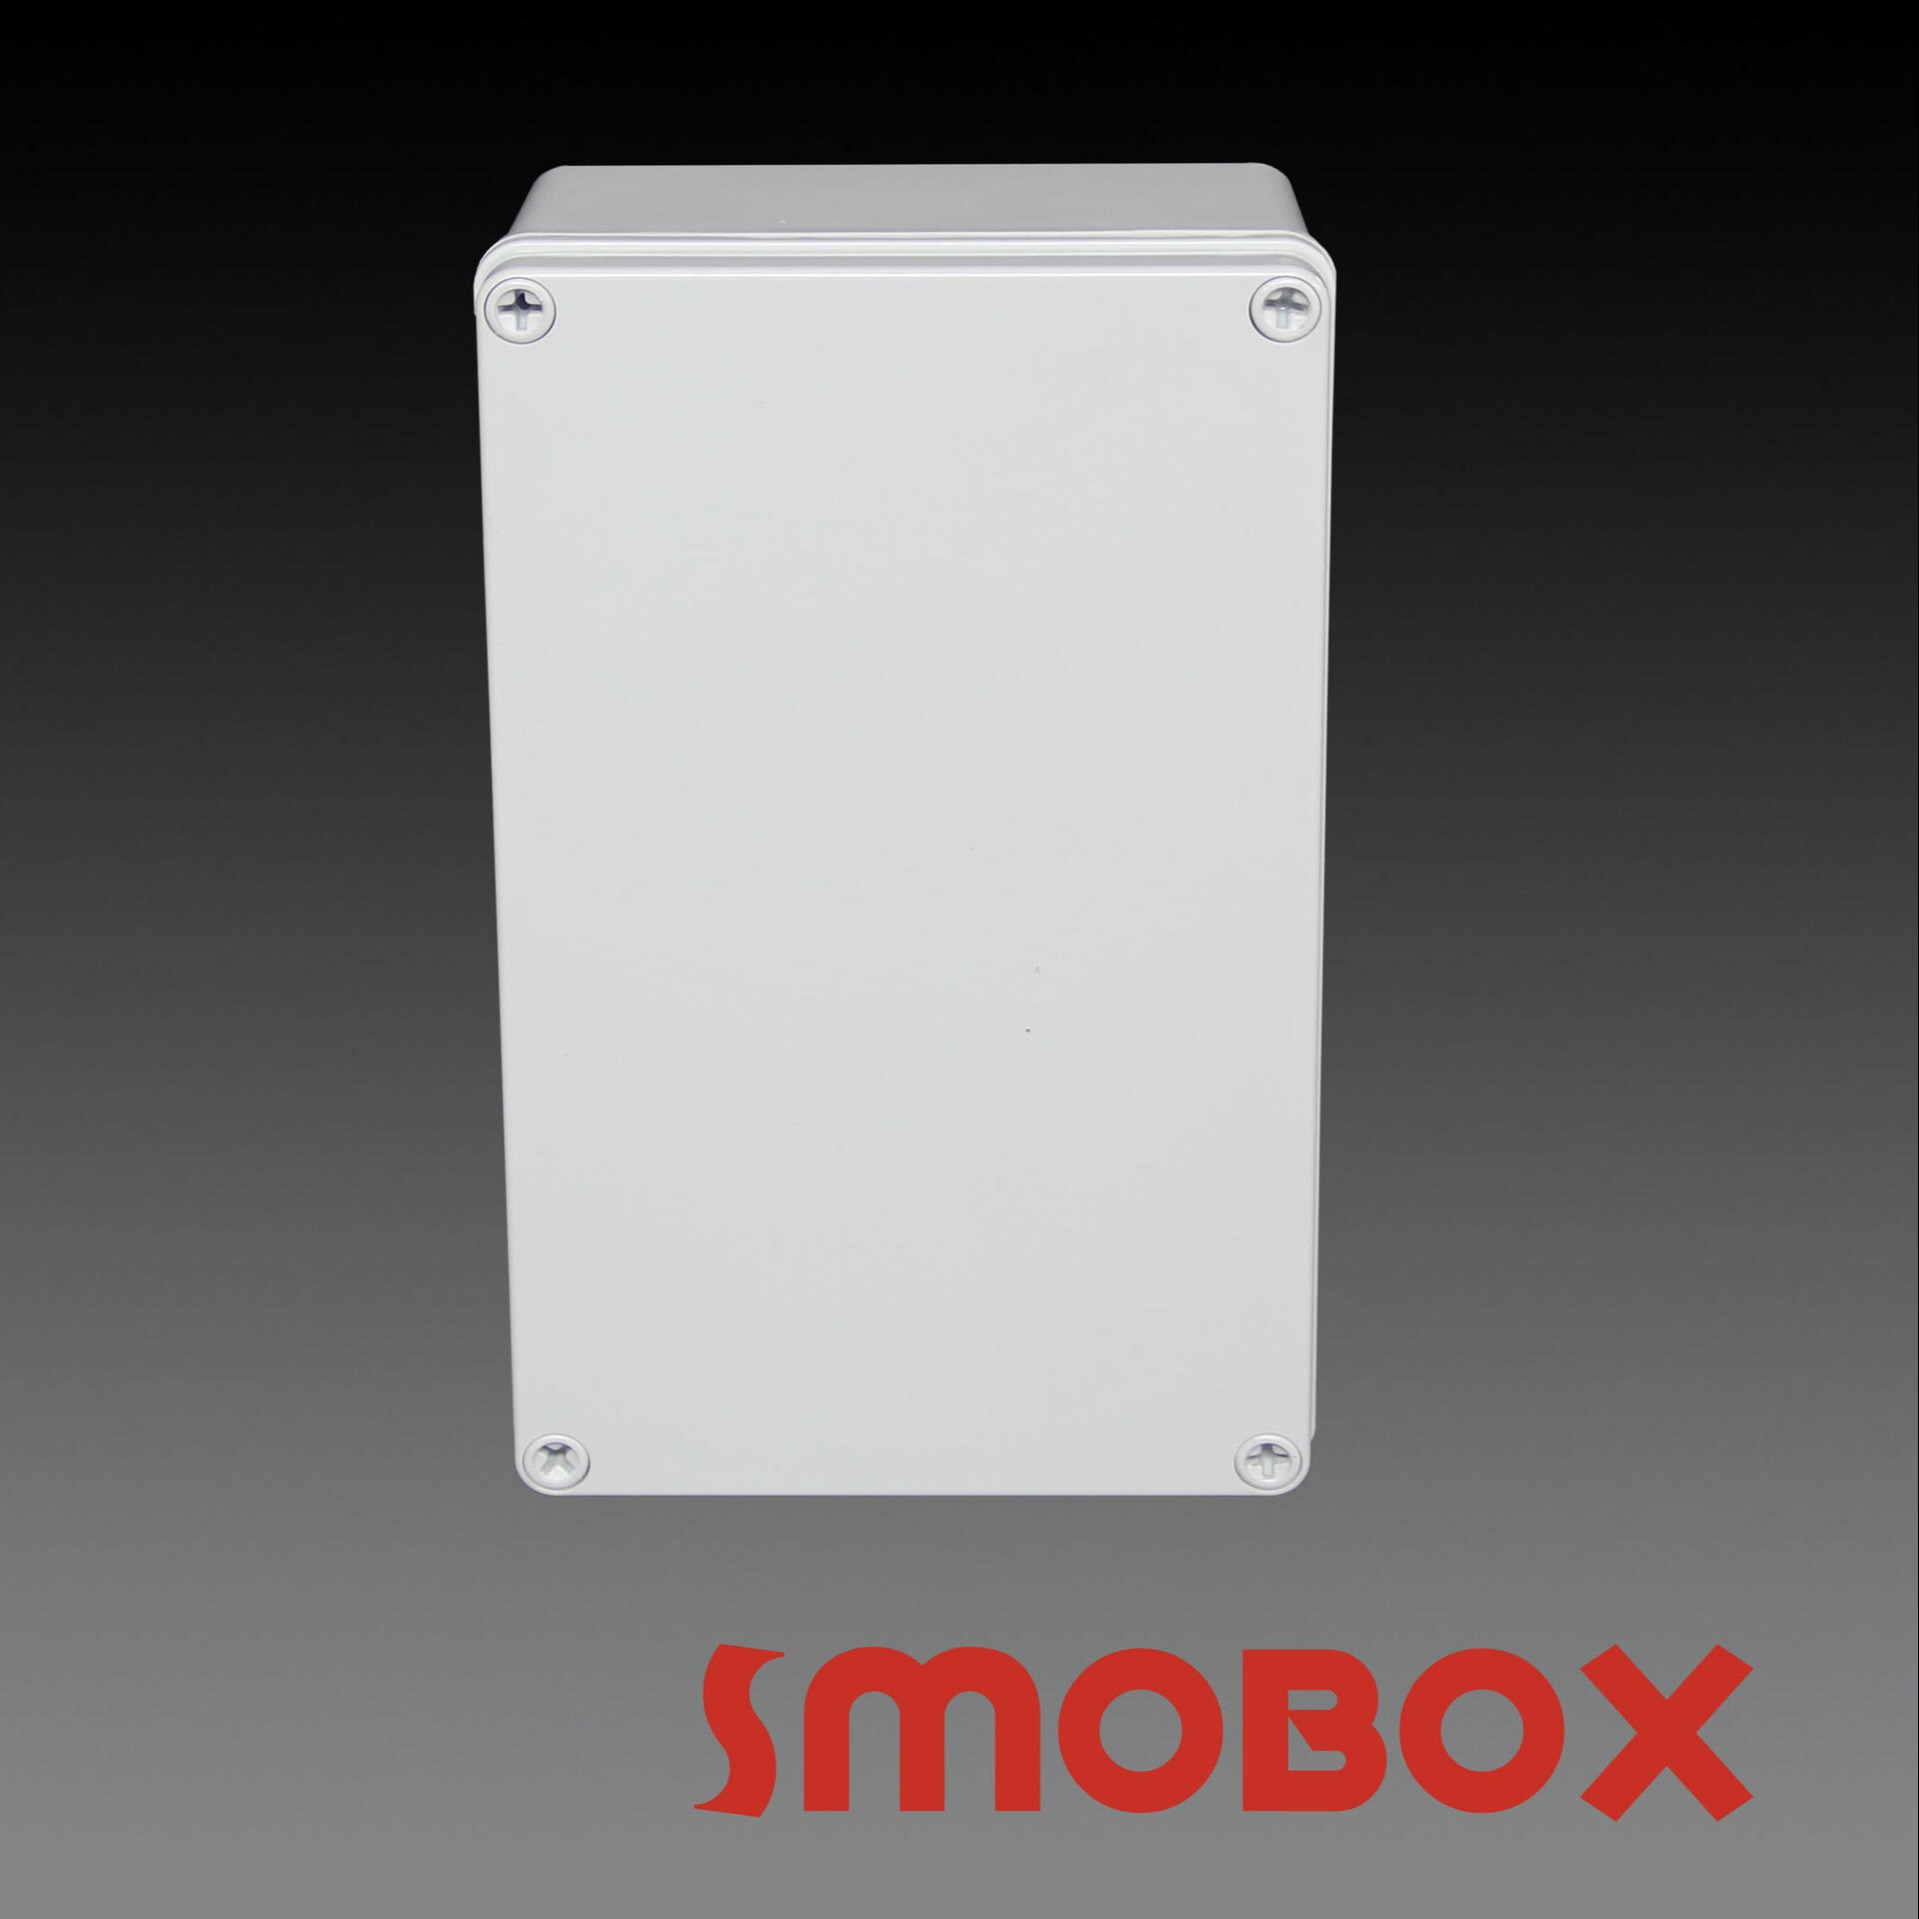 SMOBOX塑料接线箱LD-142309 防水接线盒 插座箱 塑料电控箱控制器外壳  实体工厂直营塑料壳体图片